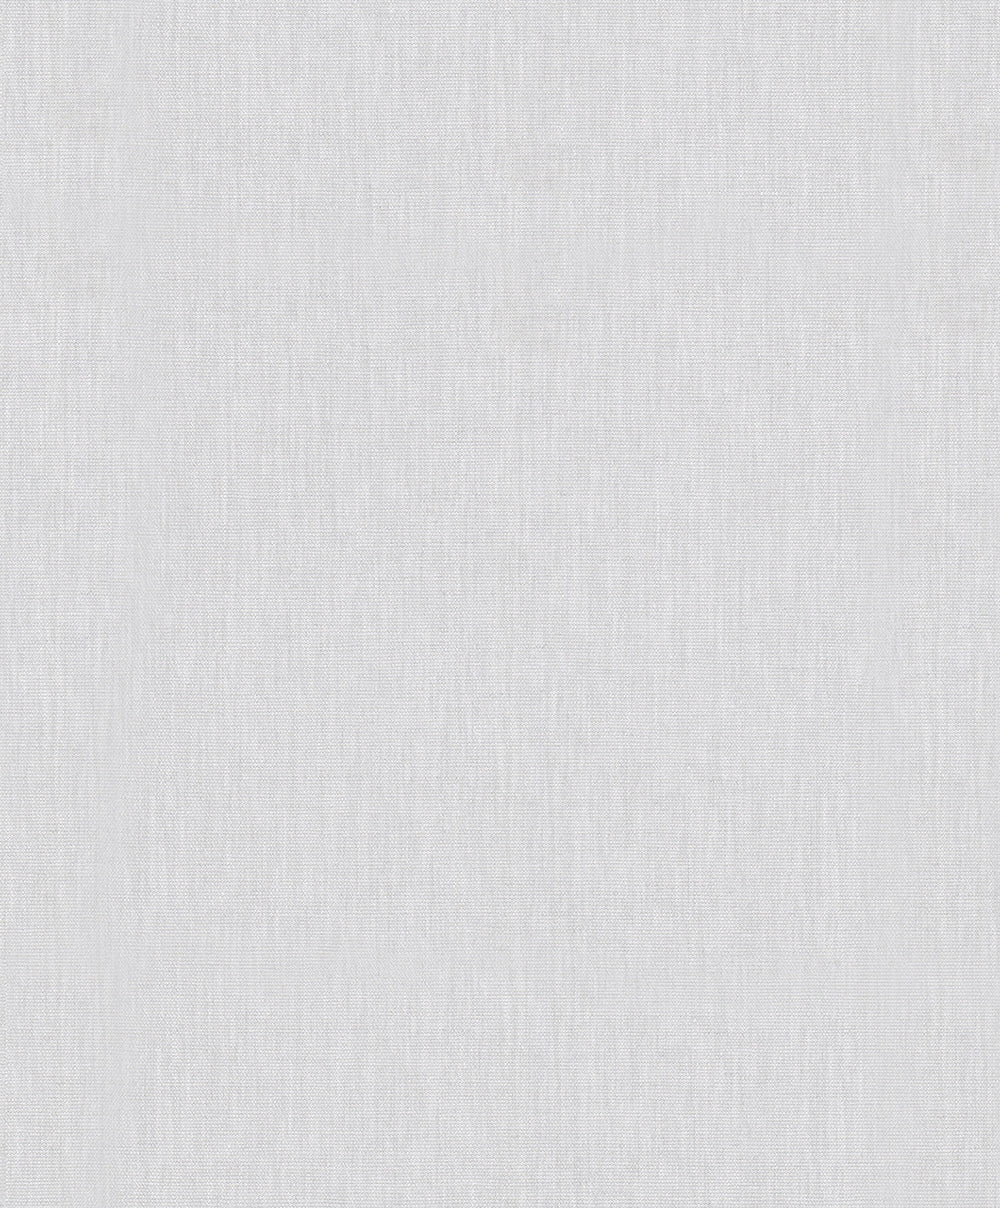 Botanica - Textured Plains plain wallpaper Marburg Roll Grey  33324